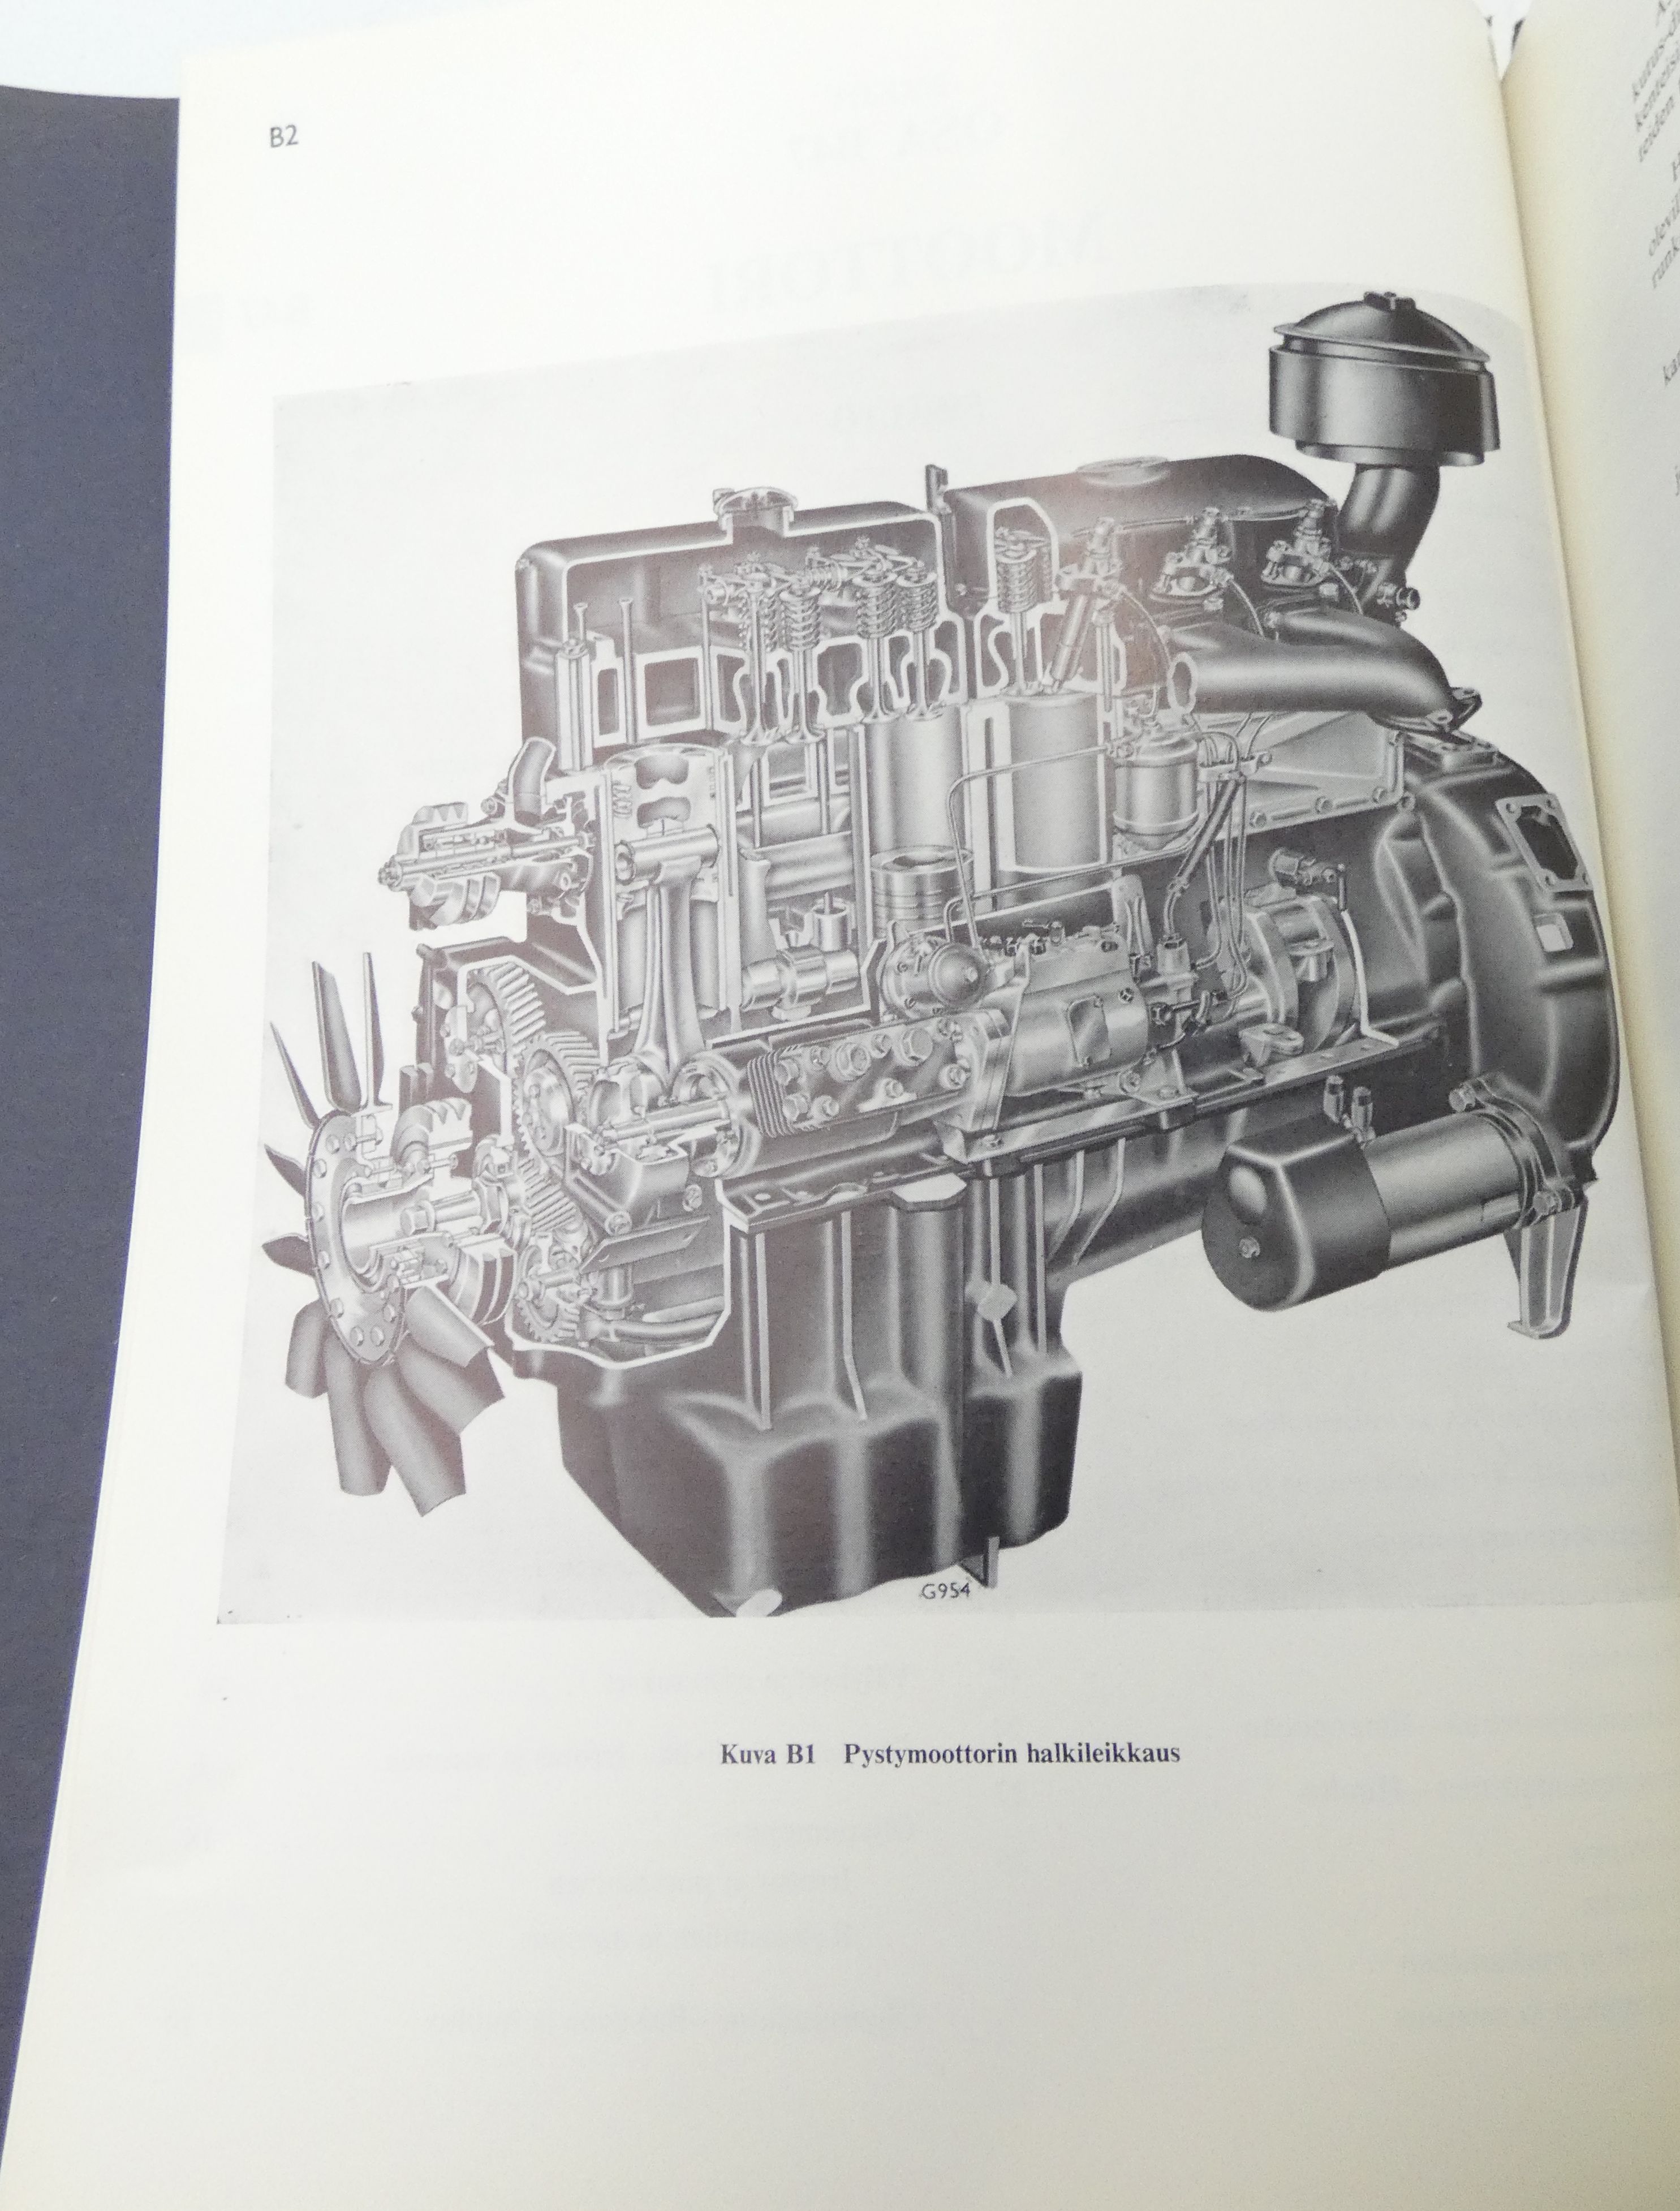 Vanaja AEC A505 suorasuihkutus -dieselmoottorin huoltokirja